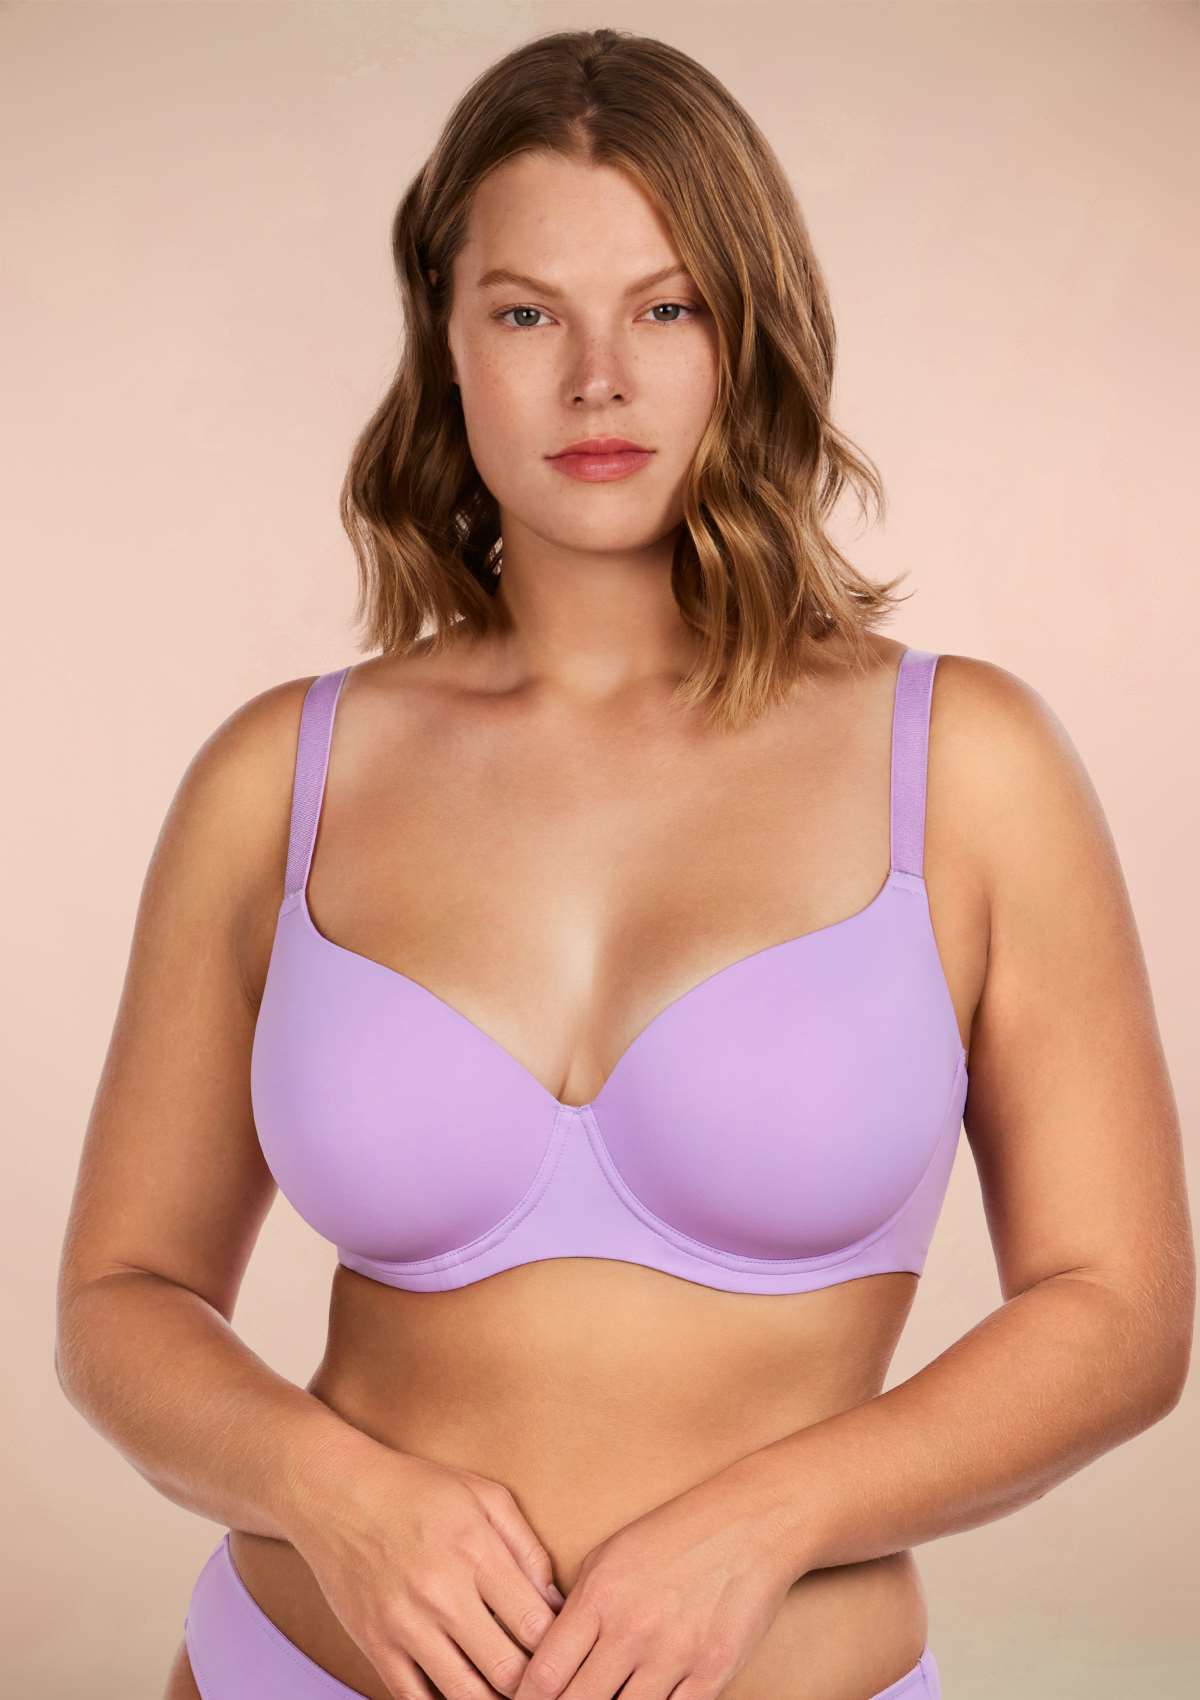 HSIA Gemma Smooth Lightly Padded T-shirt Bra For Heavy Breasts - Pink / 40 / DDD/F